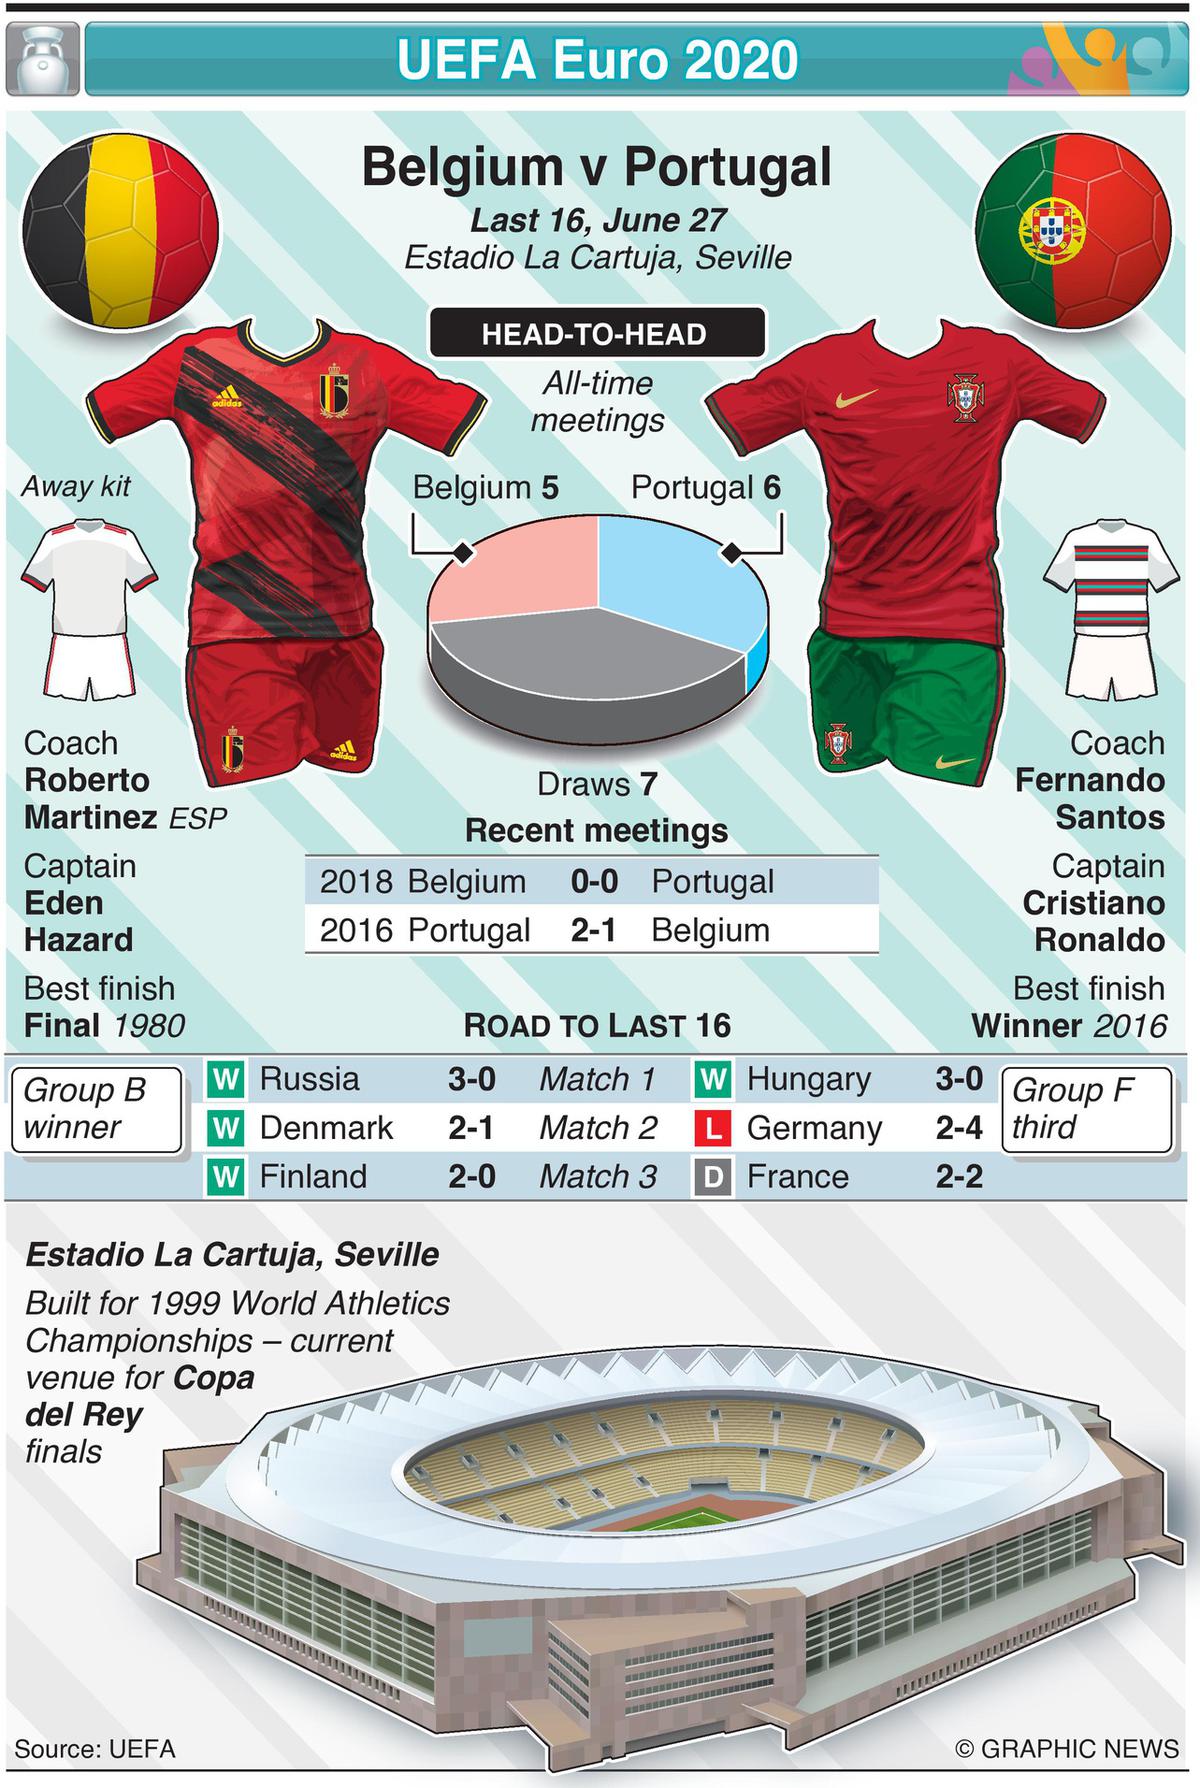 Belgium vs portugal record